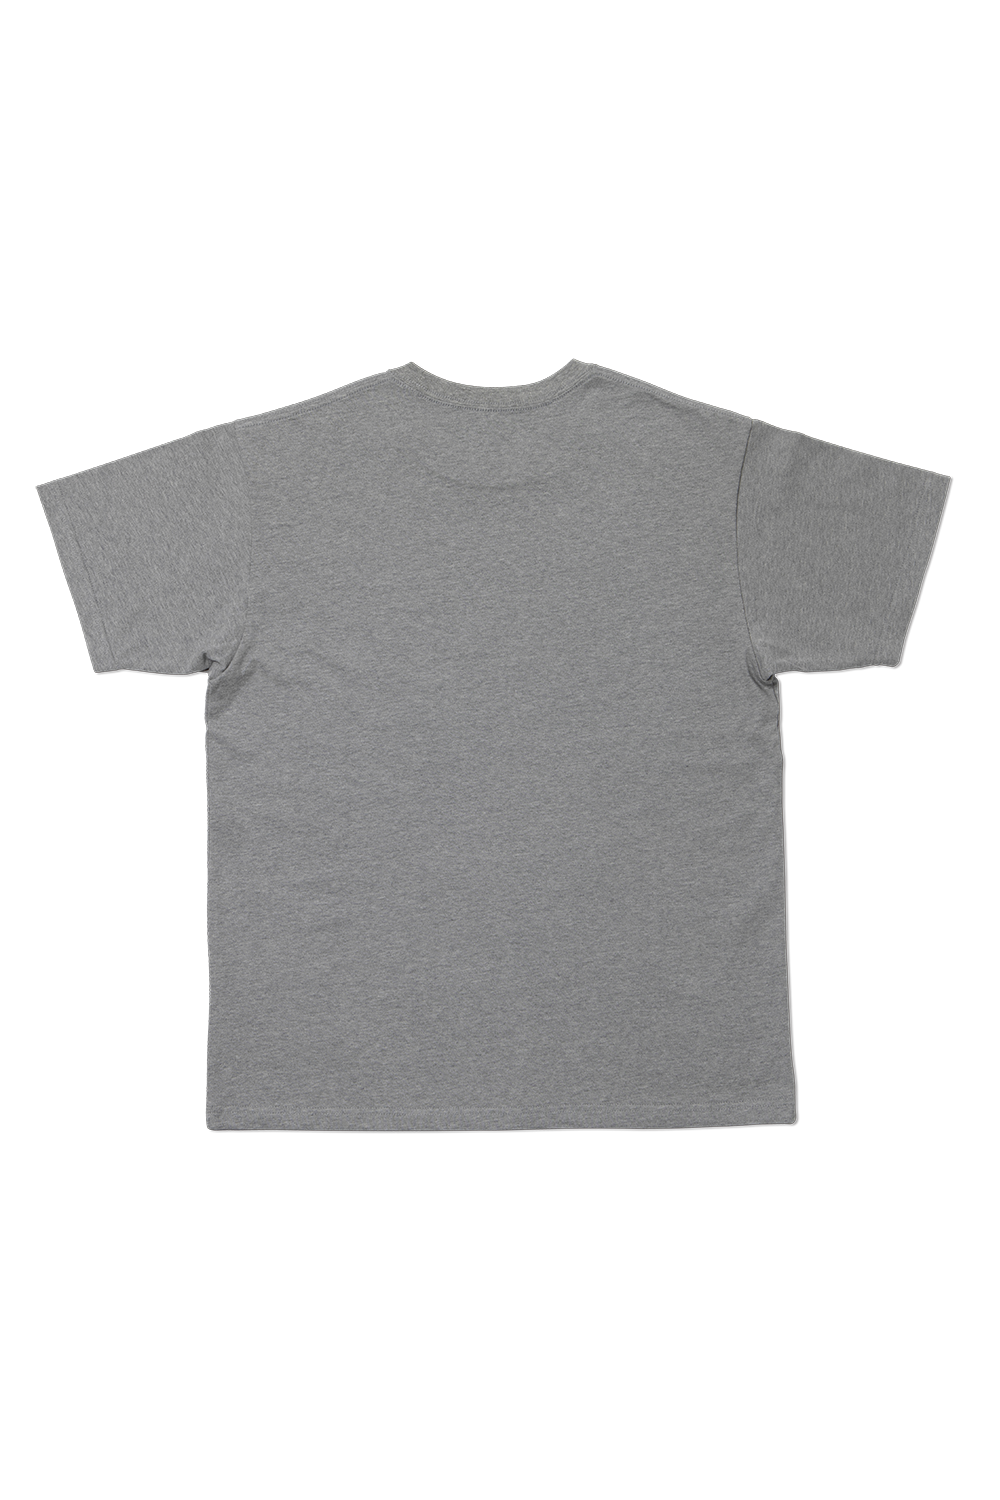 NEASE essential basic logo t-shirt (grey)